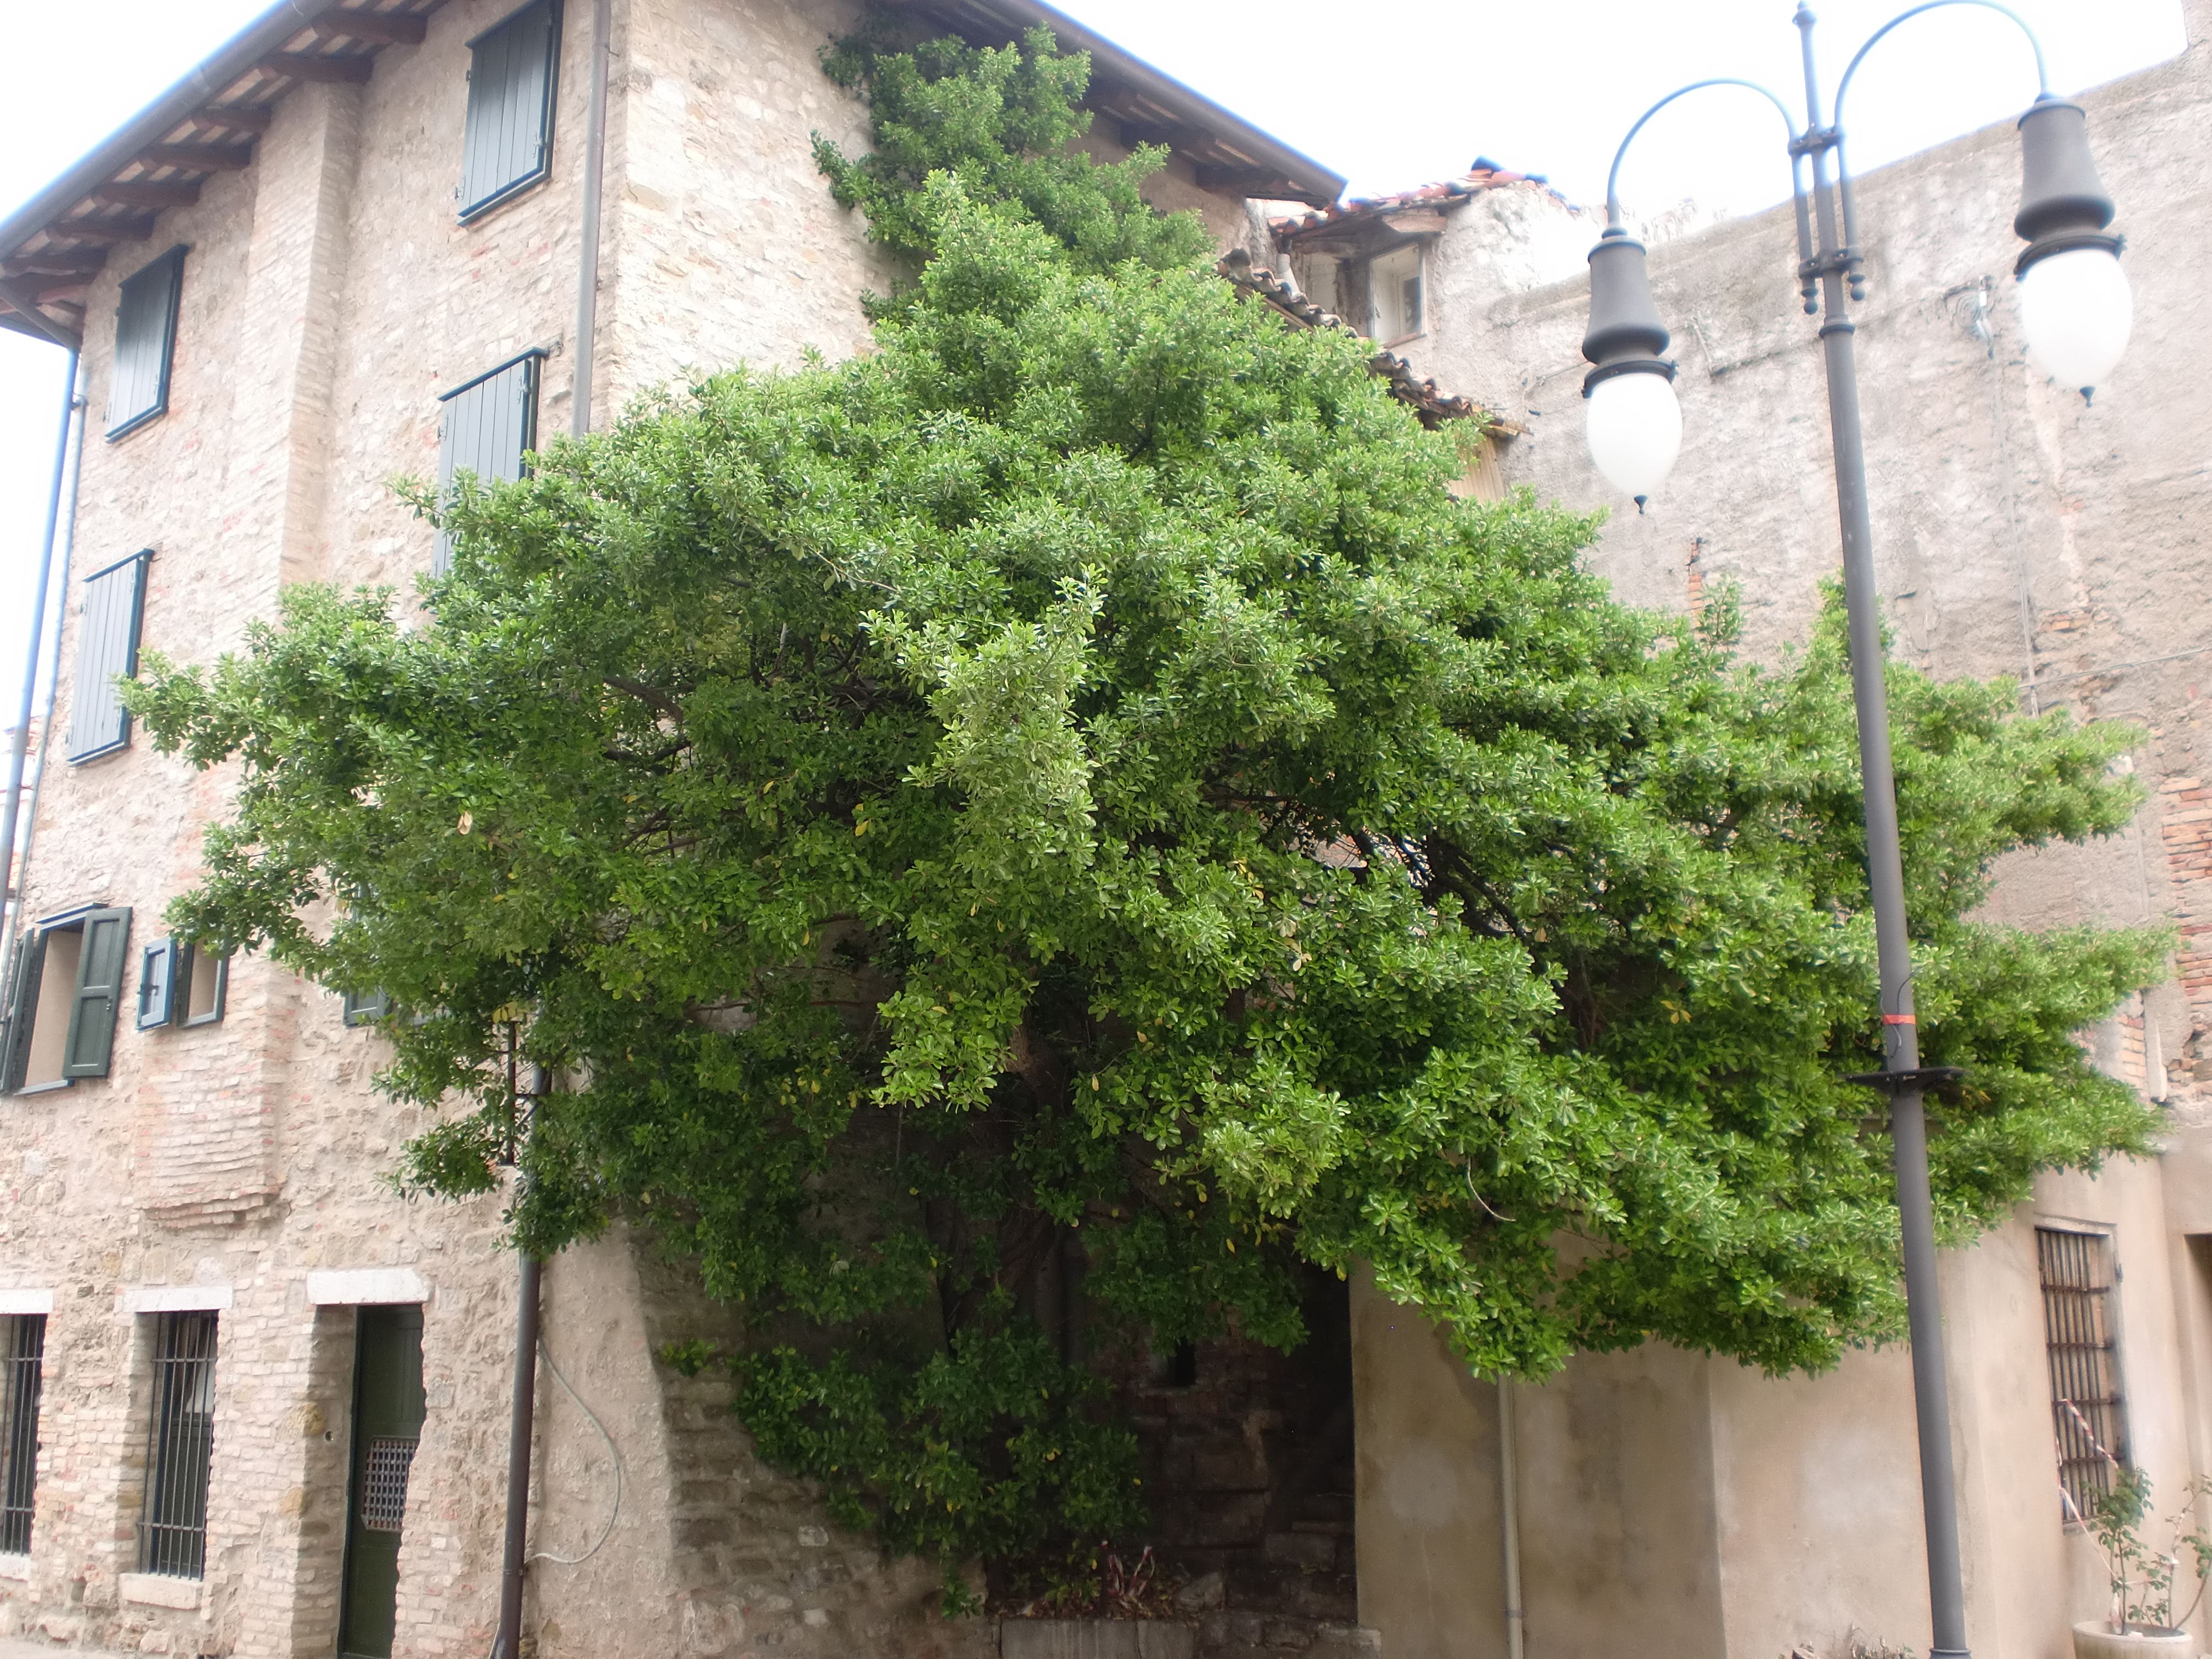 Steemit Photo Challenge #32 Entry - Italian Tree